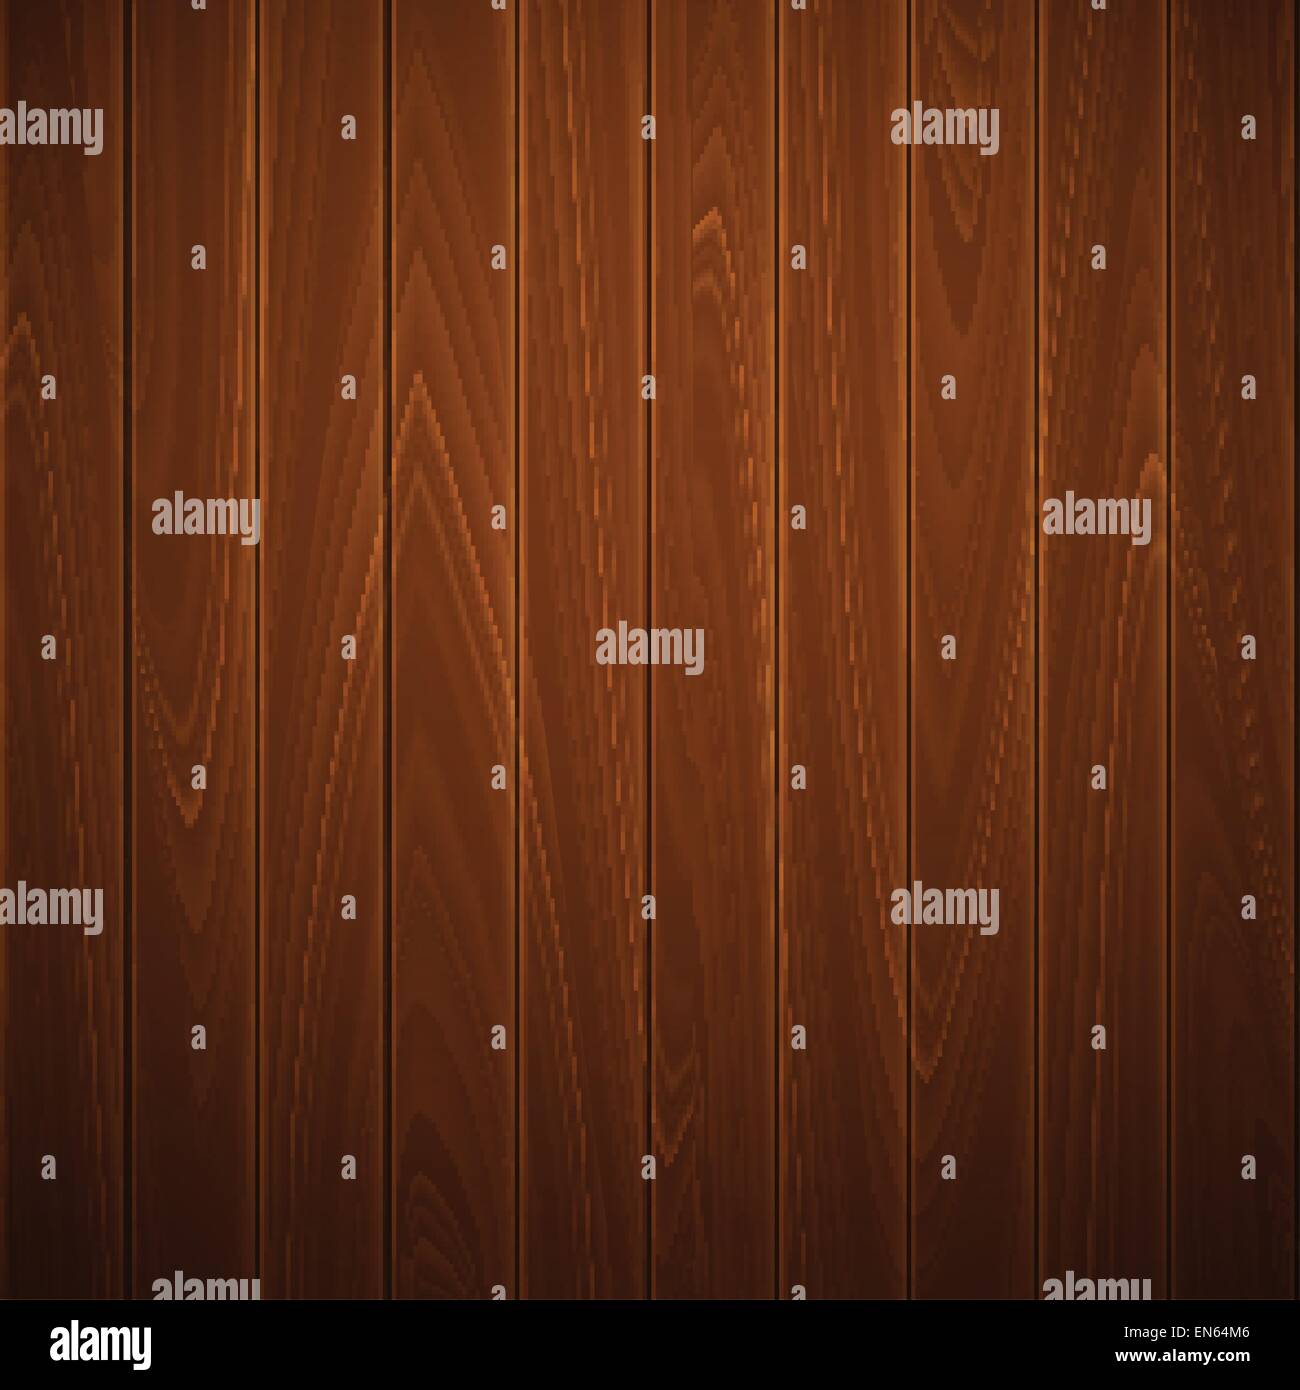 Wooden plank board background. Vector EPS 10 Stock Vector